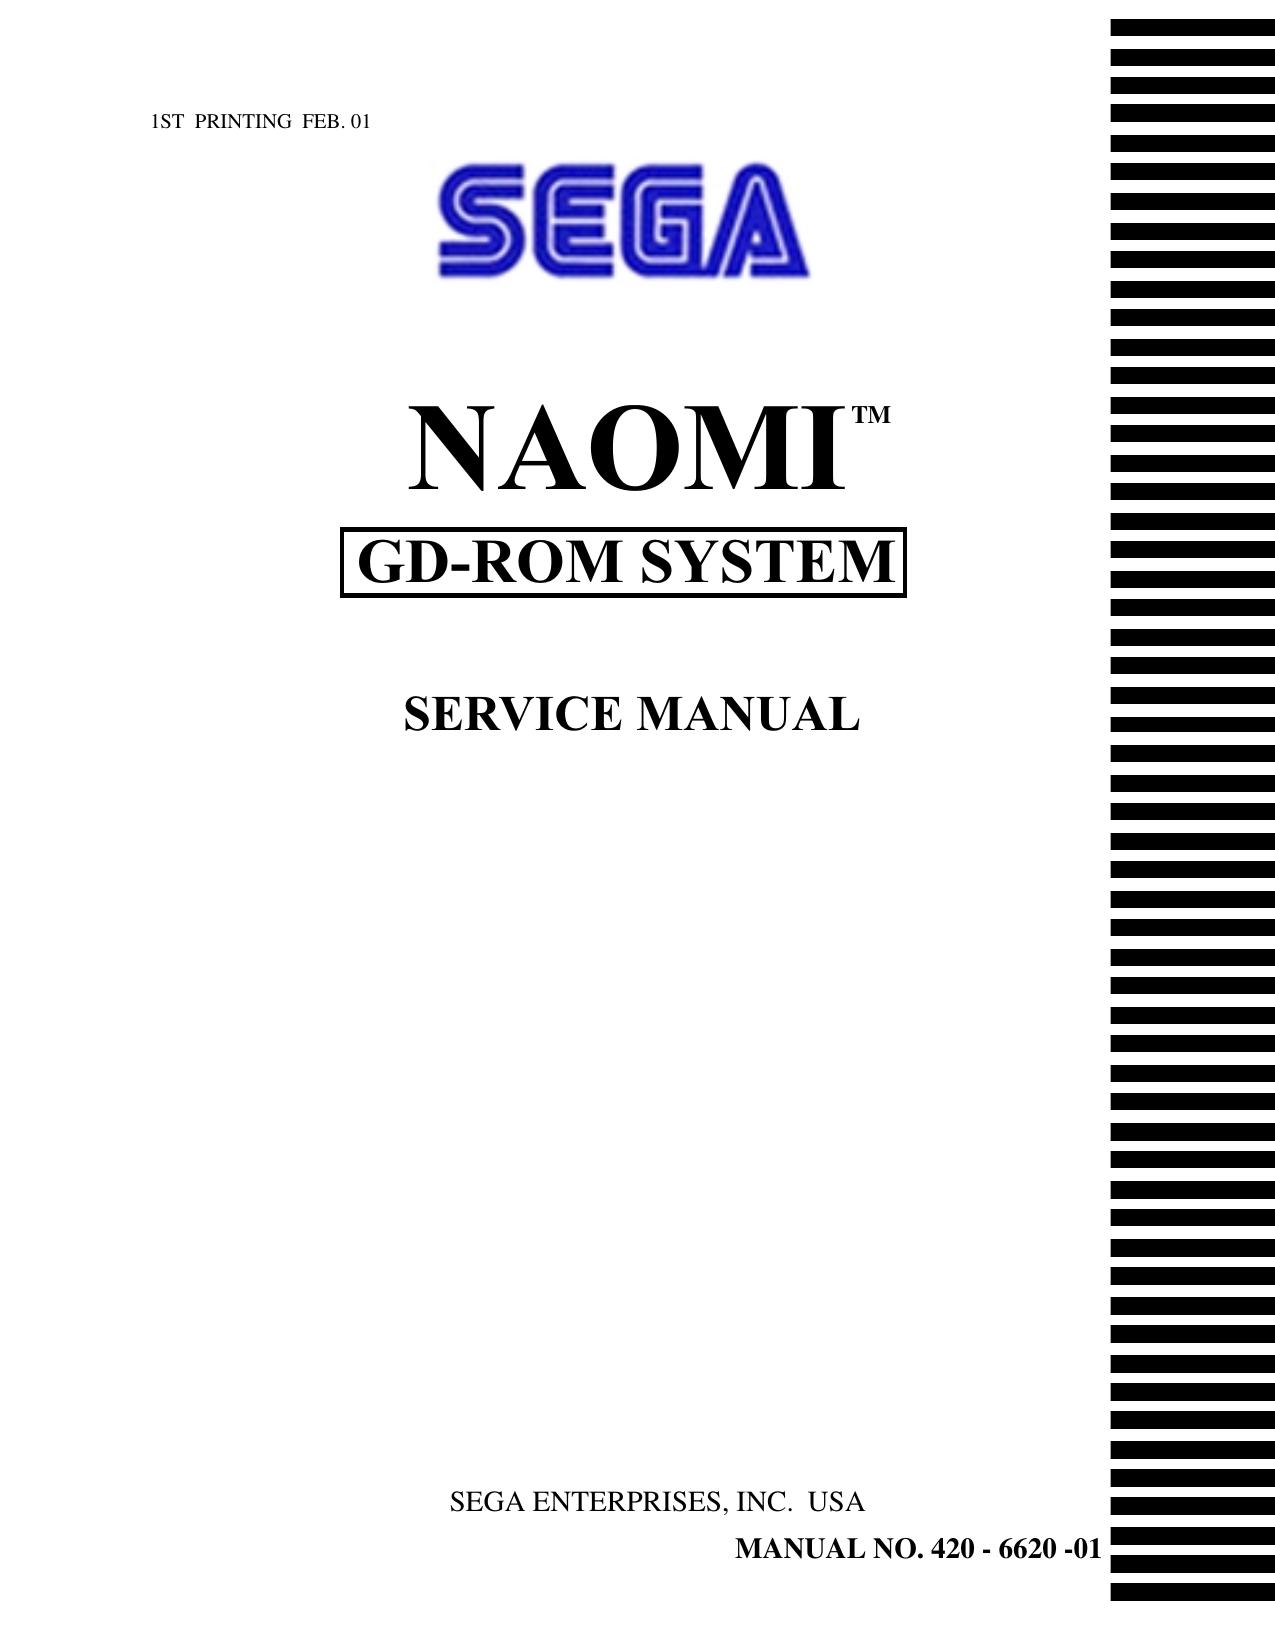 Sega Naomi gdrom system manuel